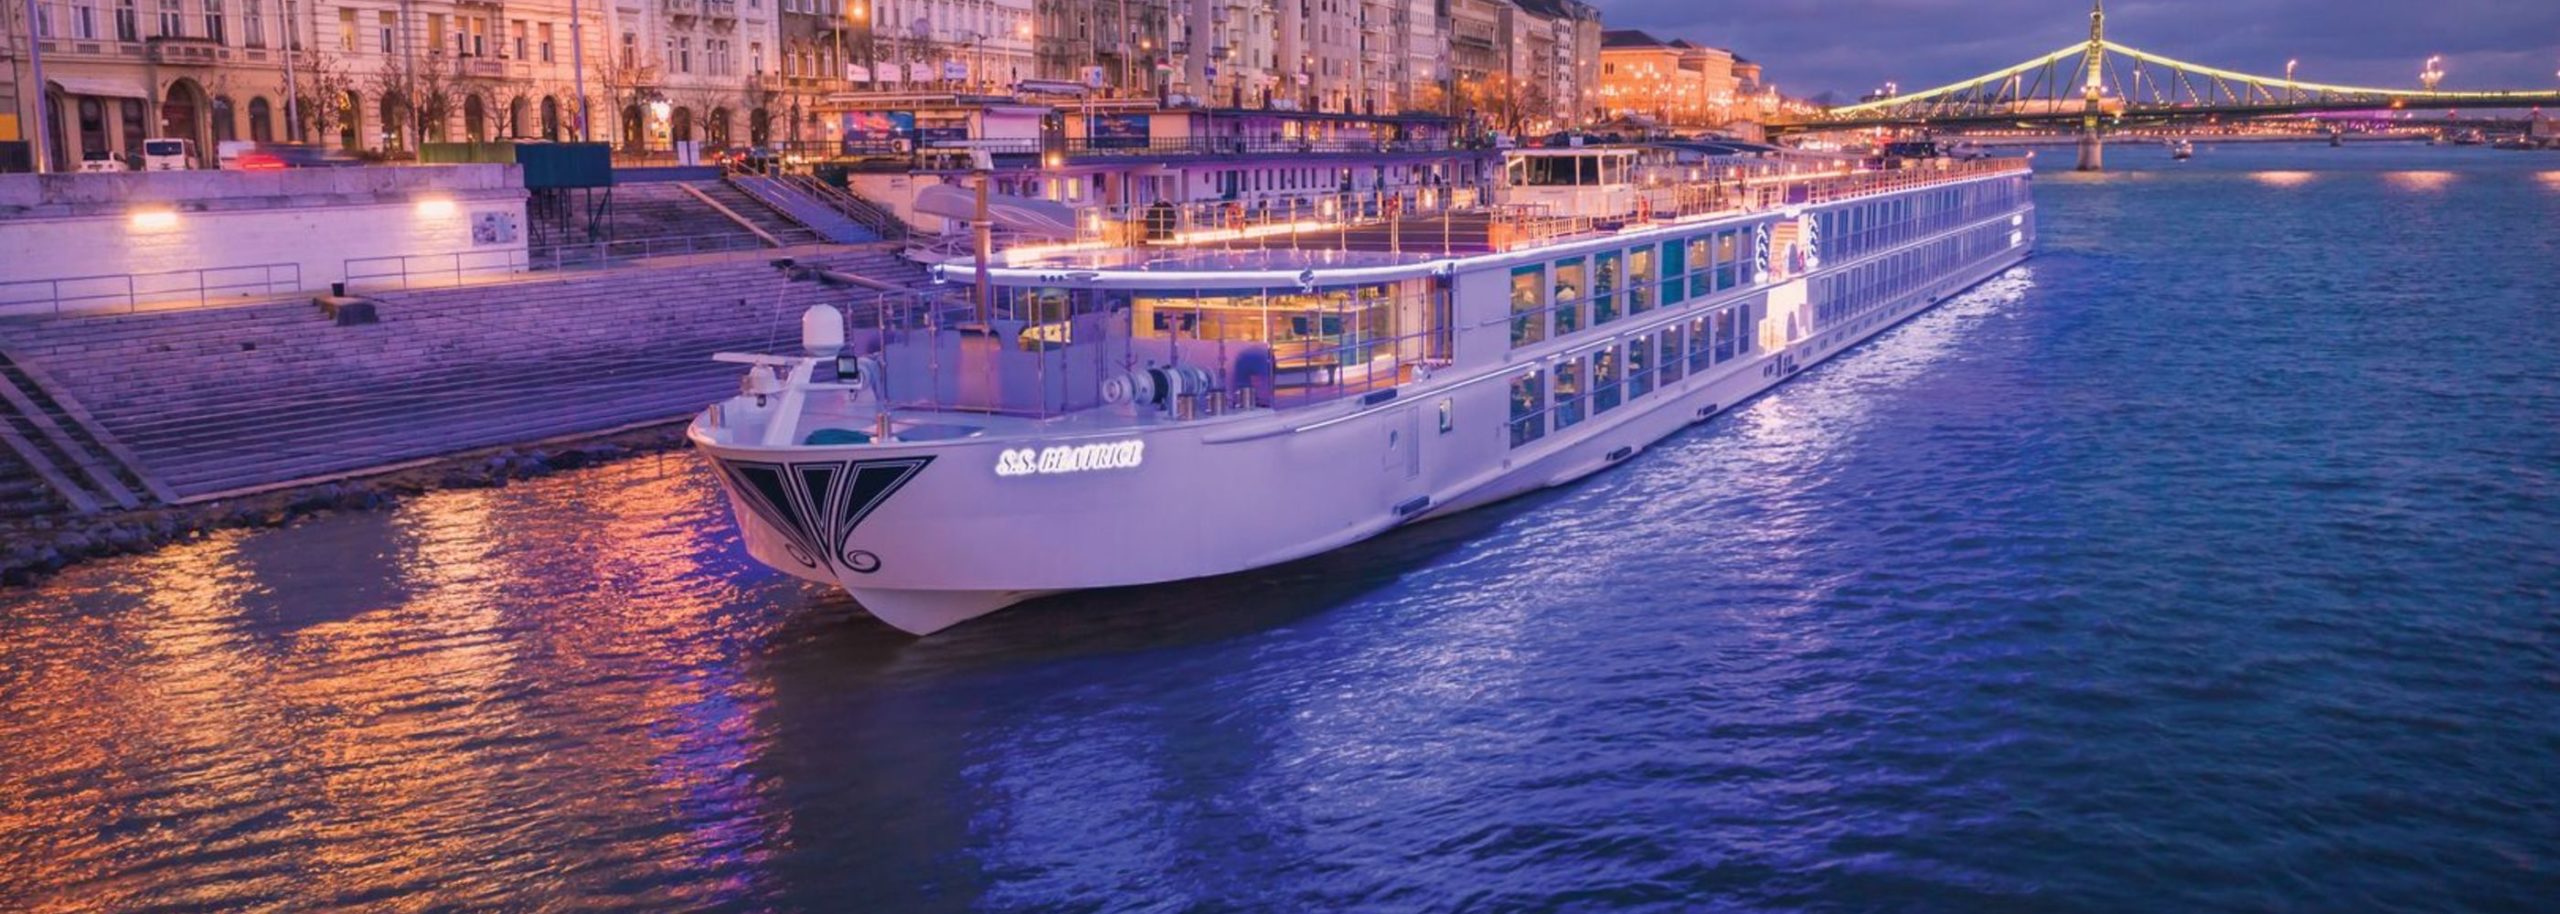 uniworld river cruise cost